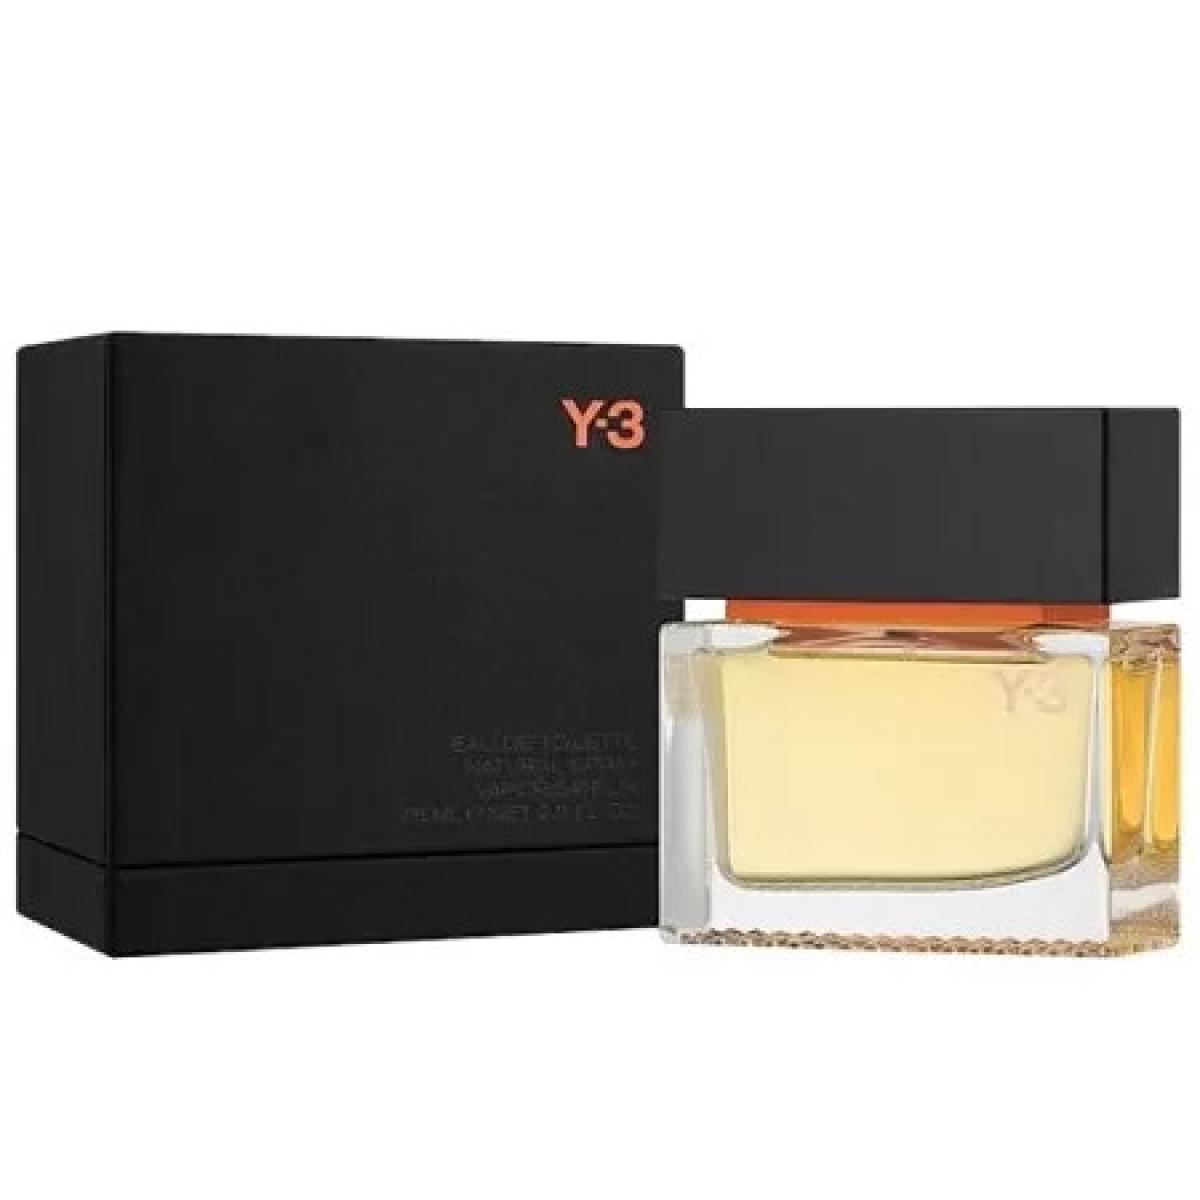 Y-3 Black Label Yohji Yamamoto cologne - a fragrance for men 2013